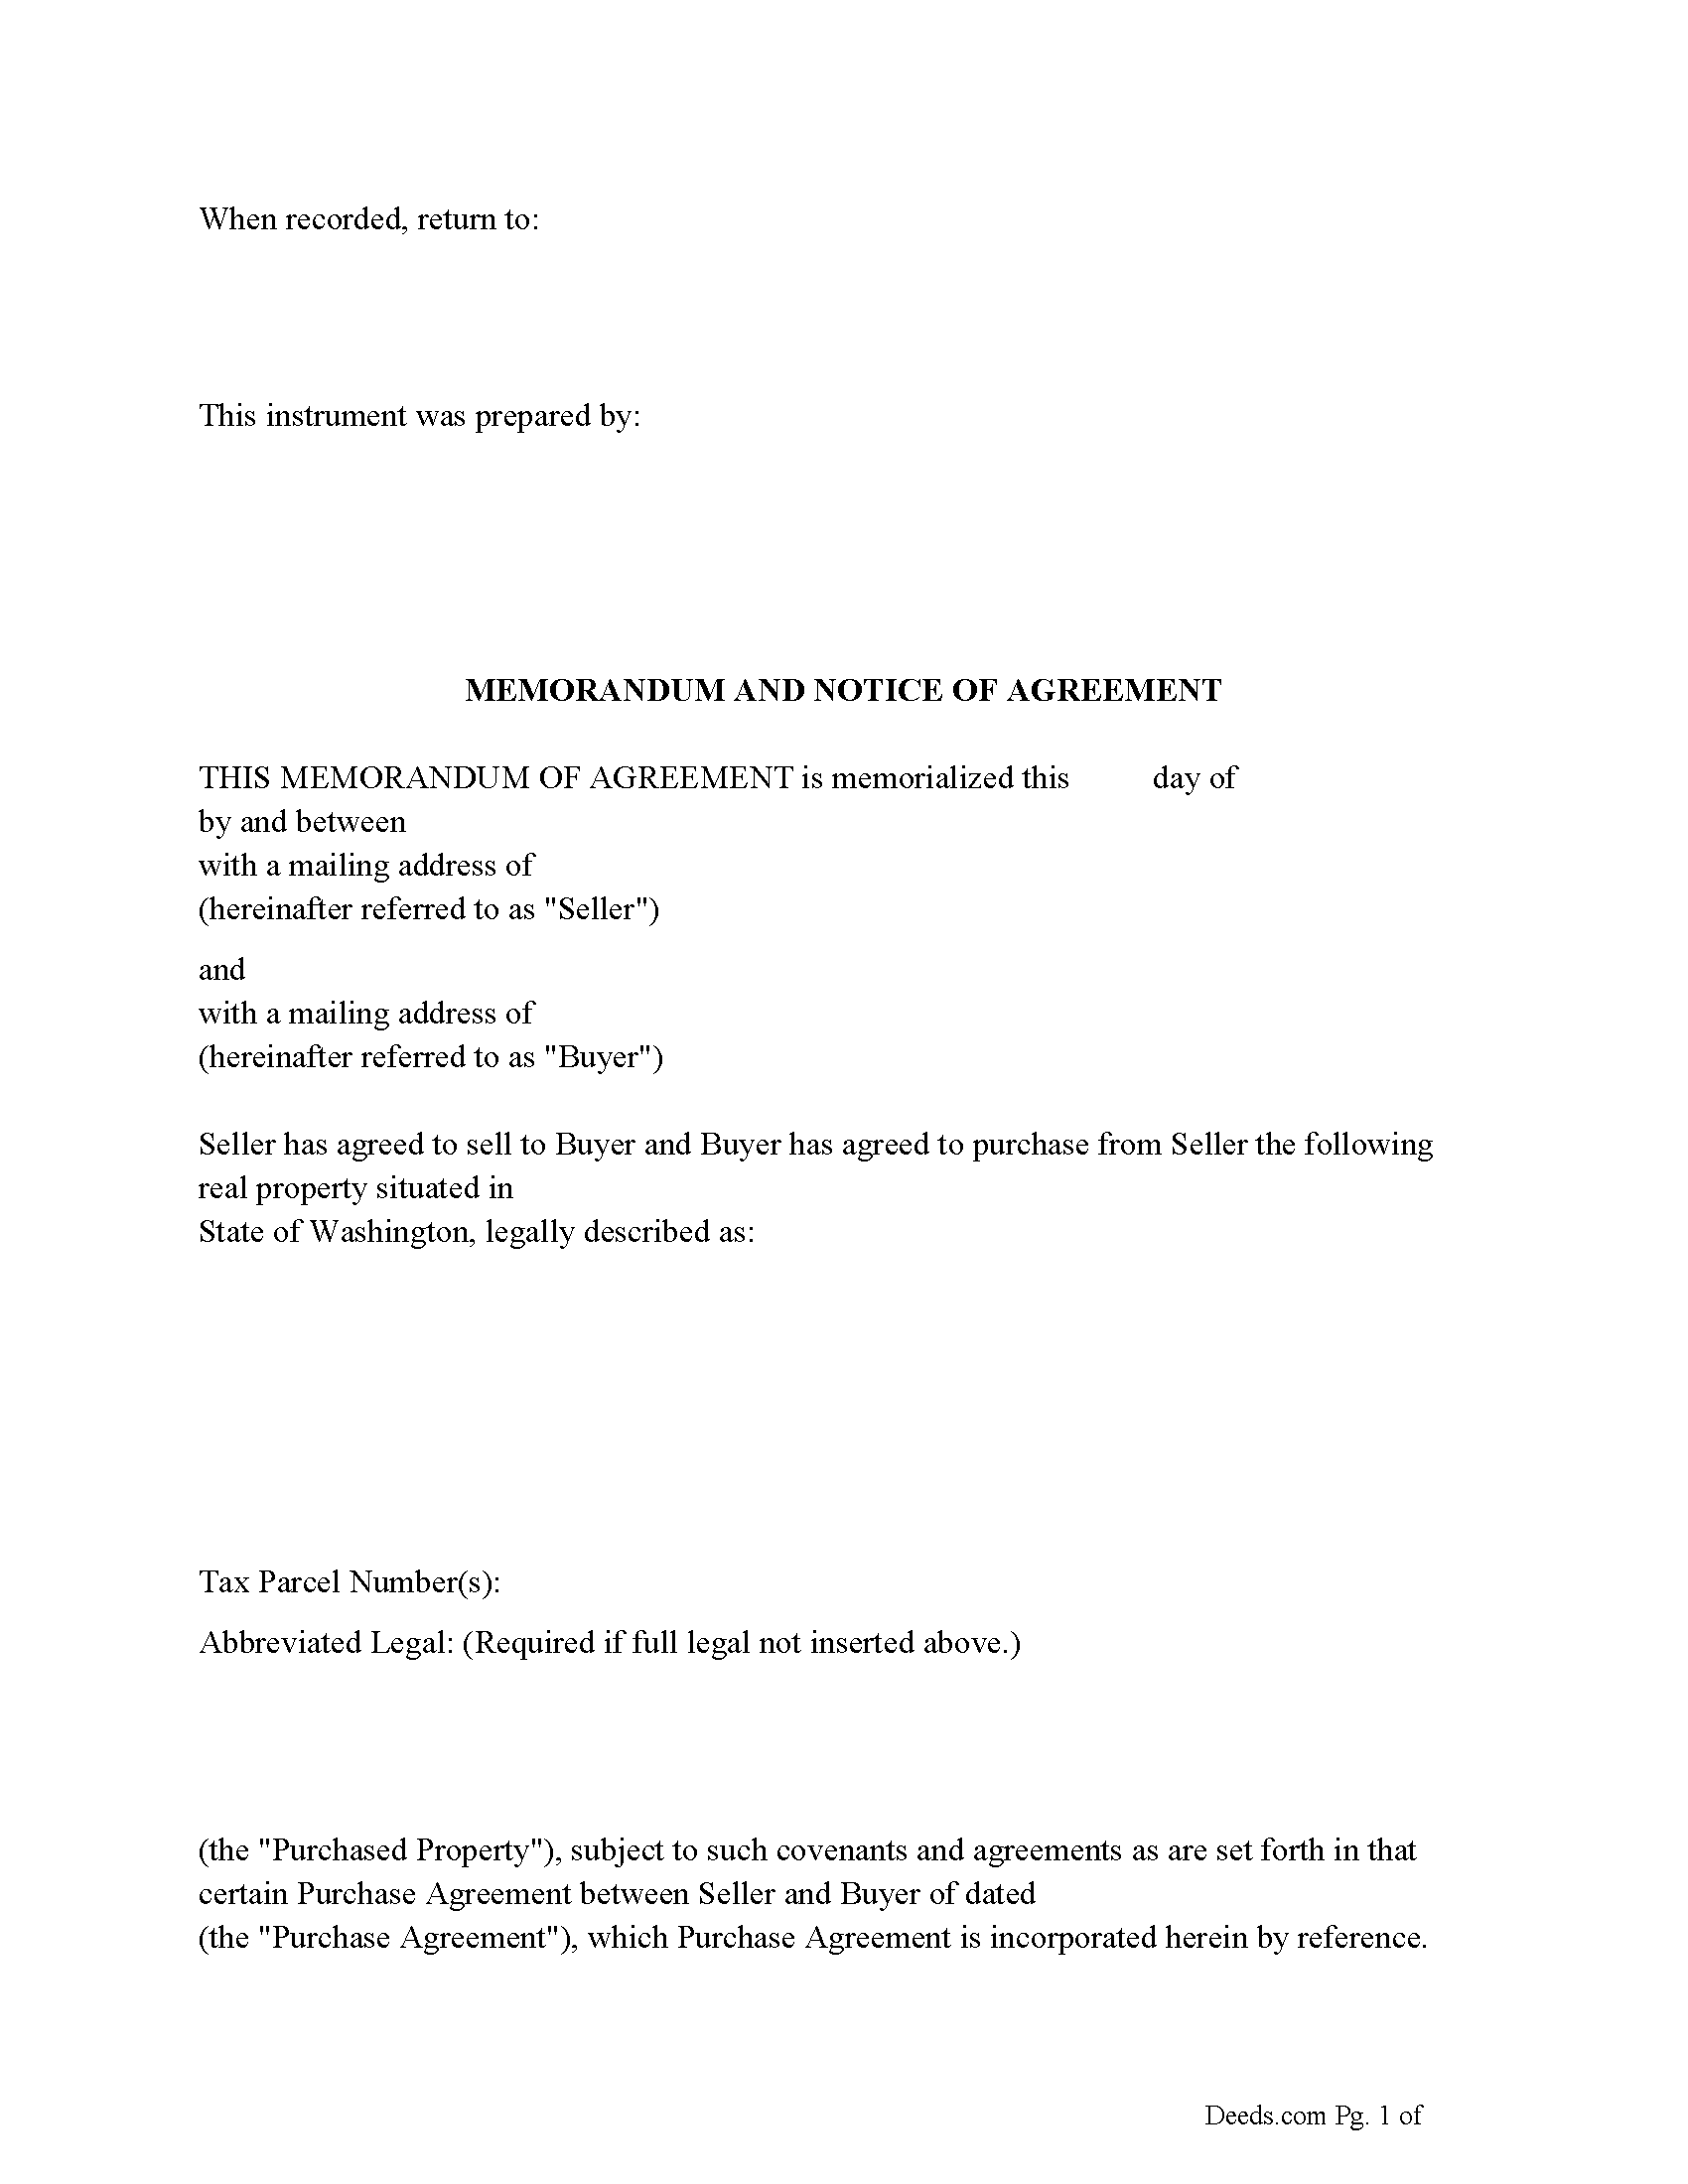 Washington Memorandum and Notice of Agreement Image